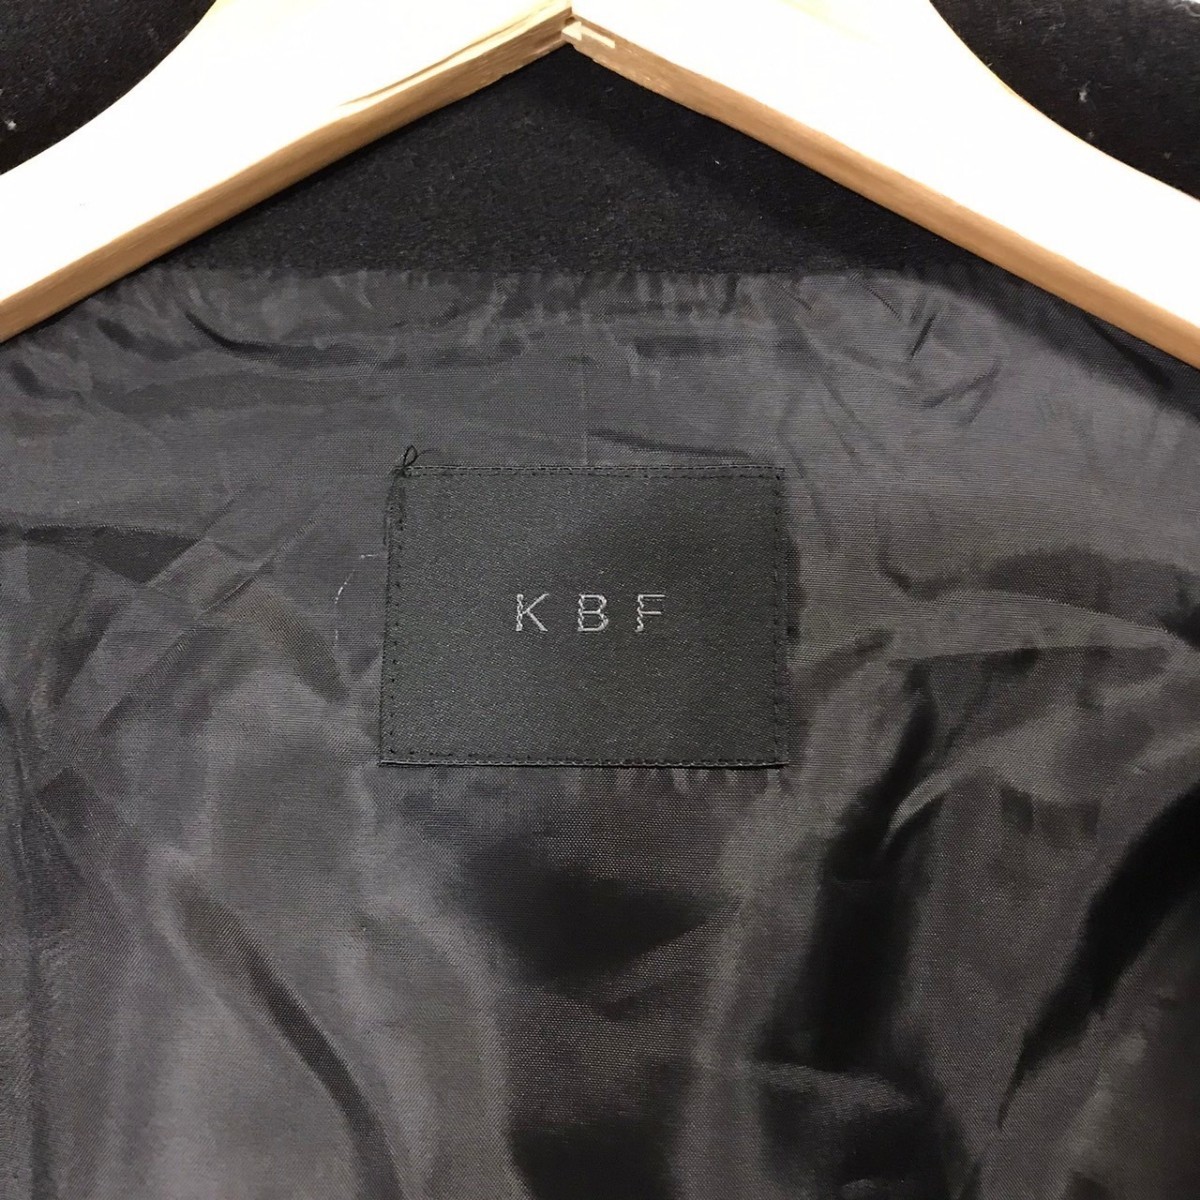 H6478dL Urban Research KBFke- Be ef size One (L~XL rank ) short oversize coat black black lady's jacket 